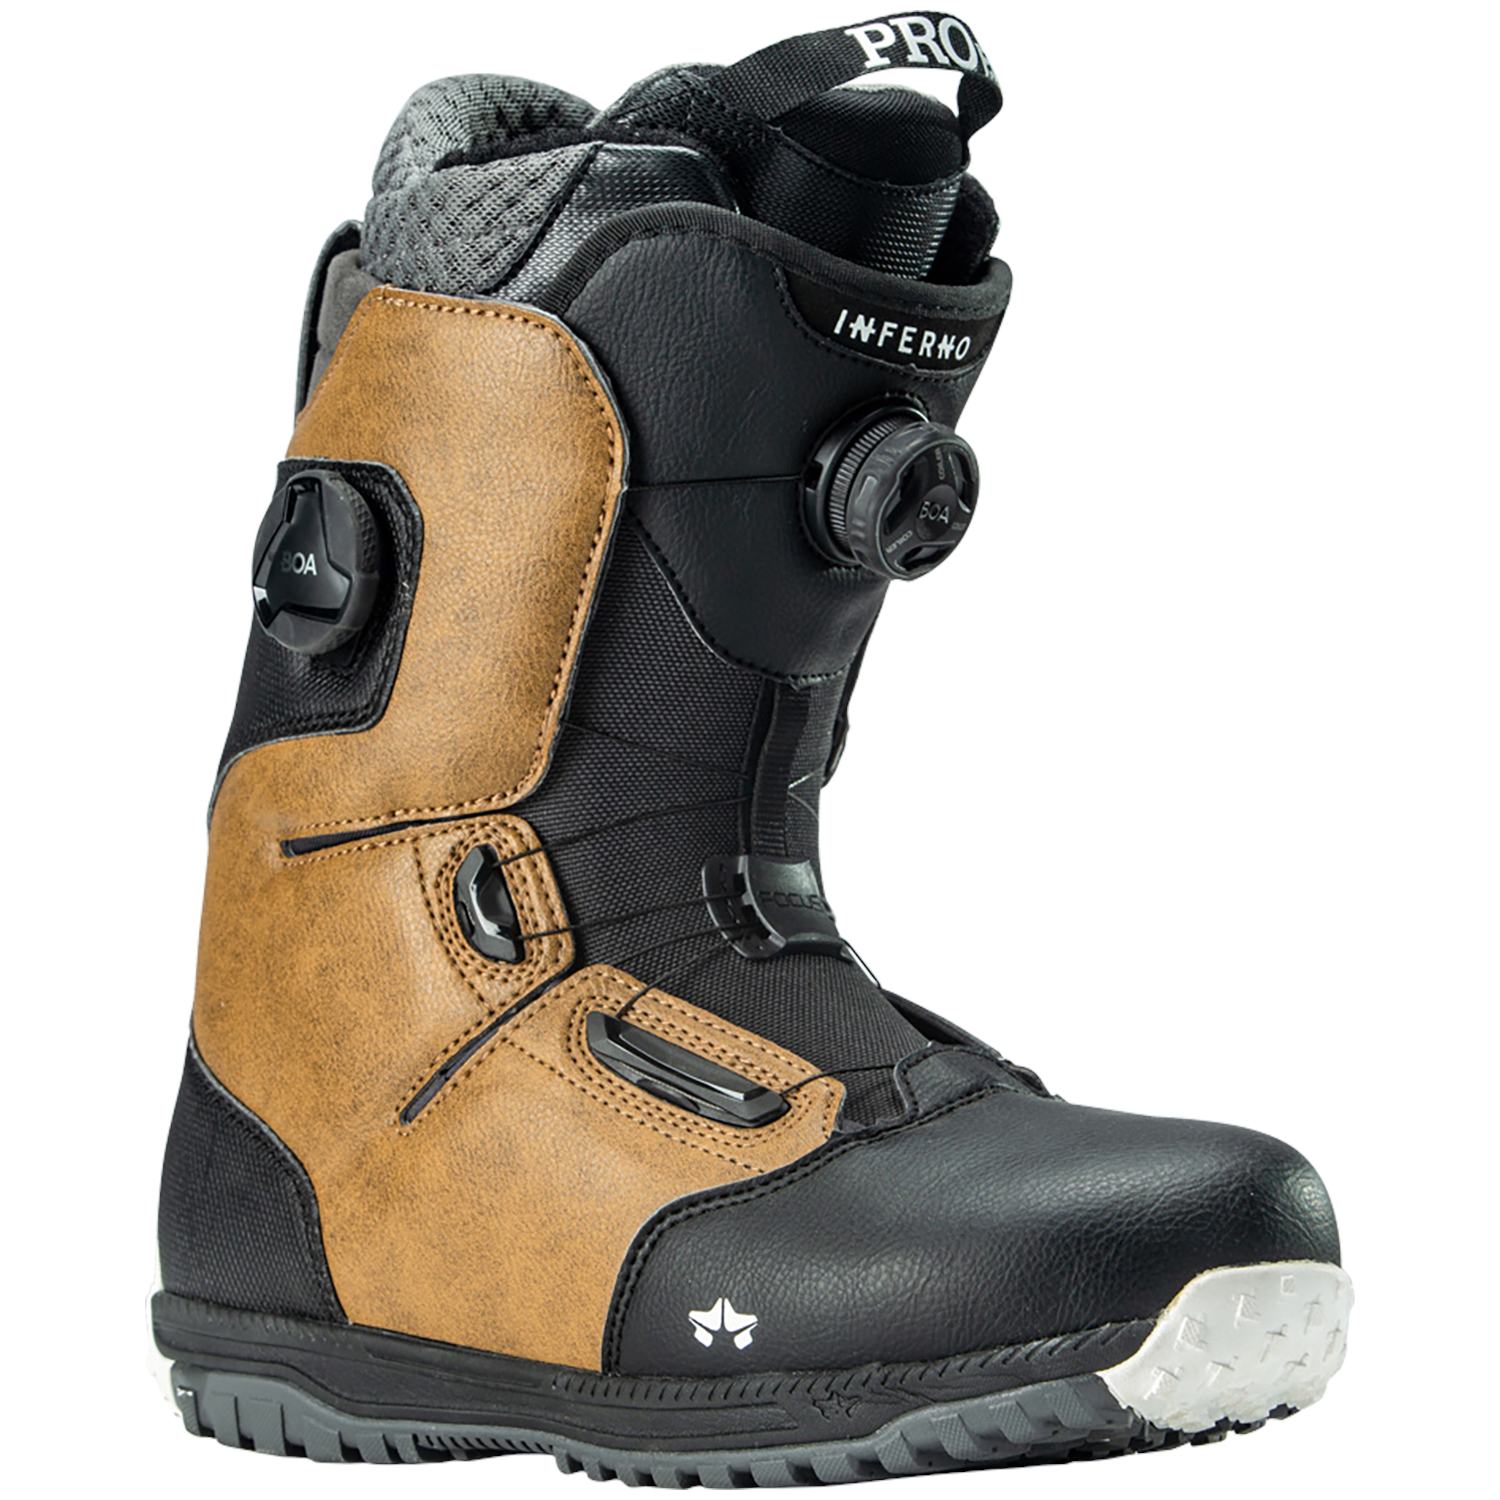 Rome Snowboards Inferno Snowboard Boots, Black, 12並行輸入